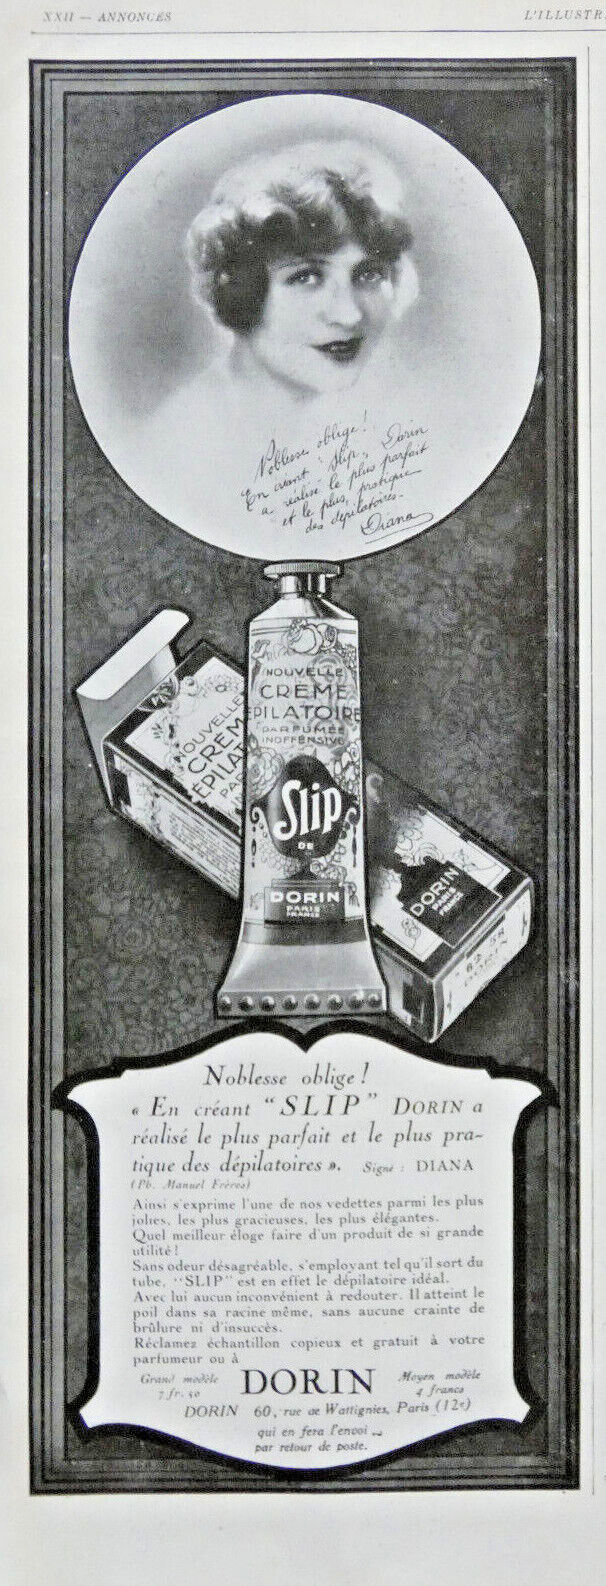 1928 ADVERTISING DORIN BRIEF EPILATORY CREAM IS USED AS IS - DIANA